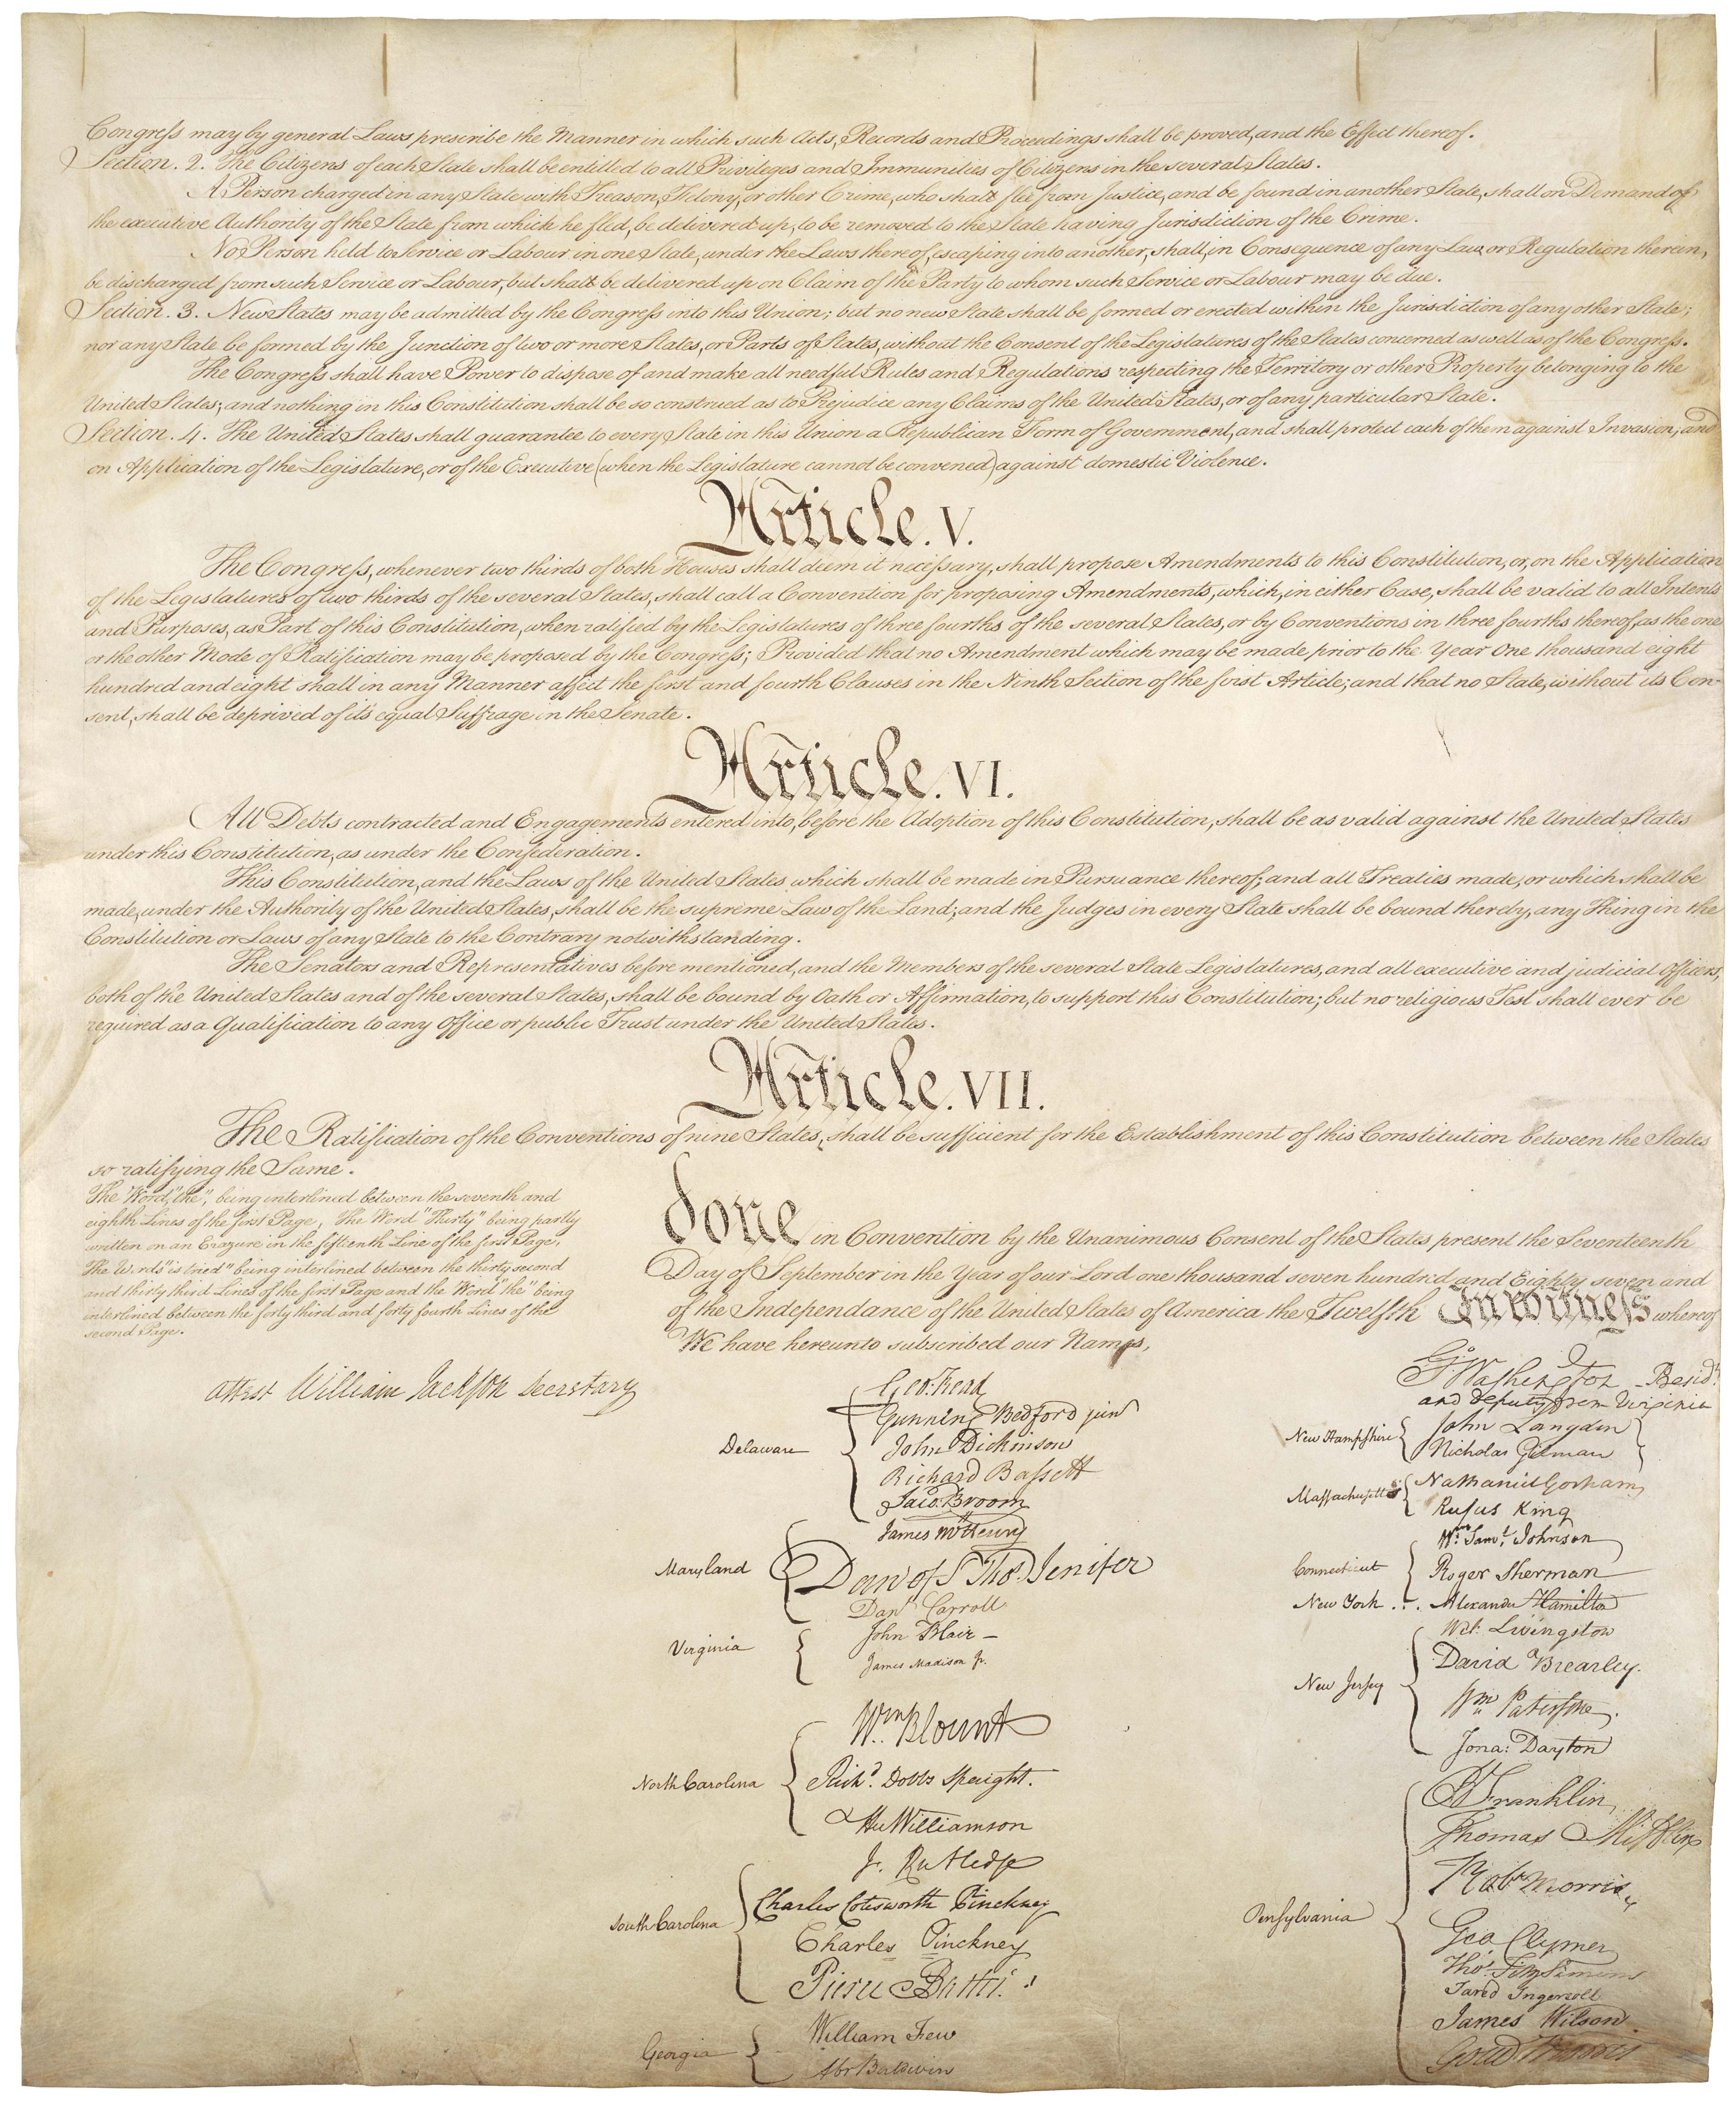 U.S. Constitution Wallpapers